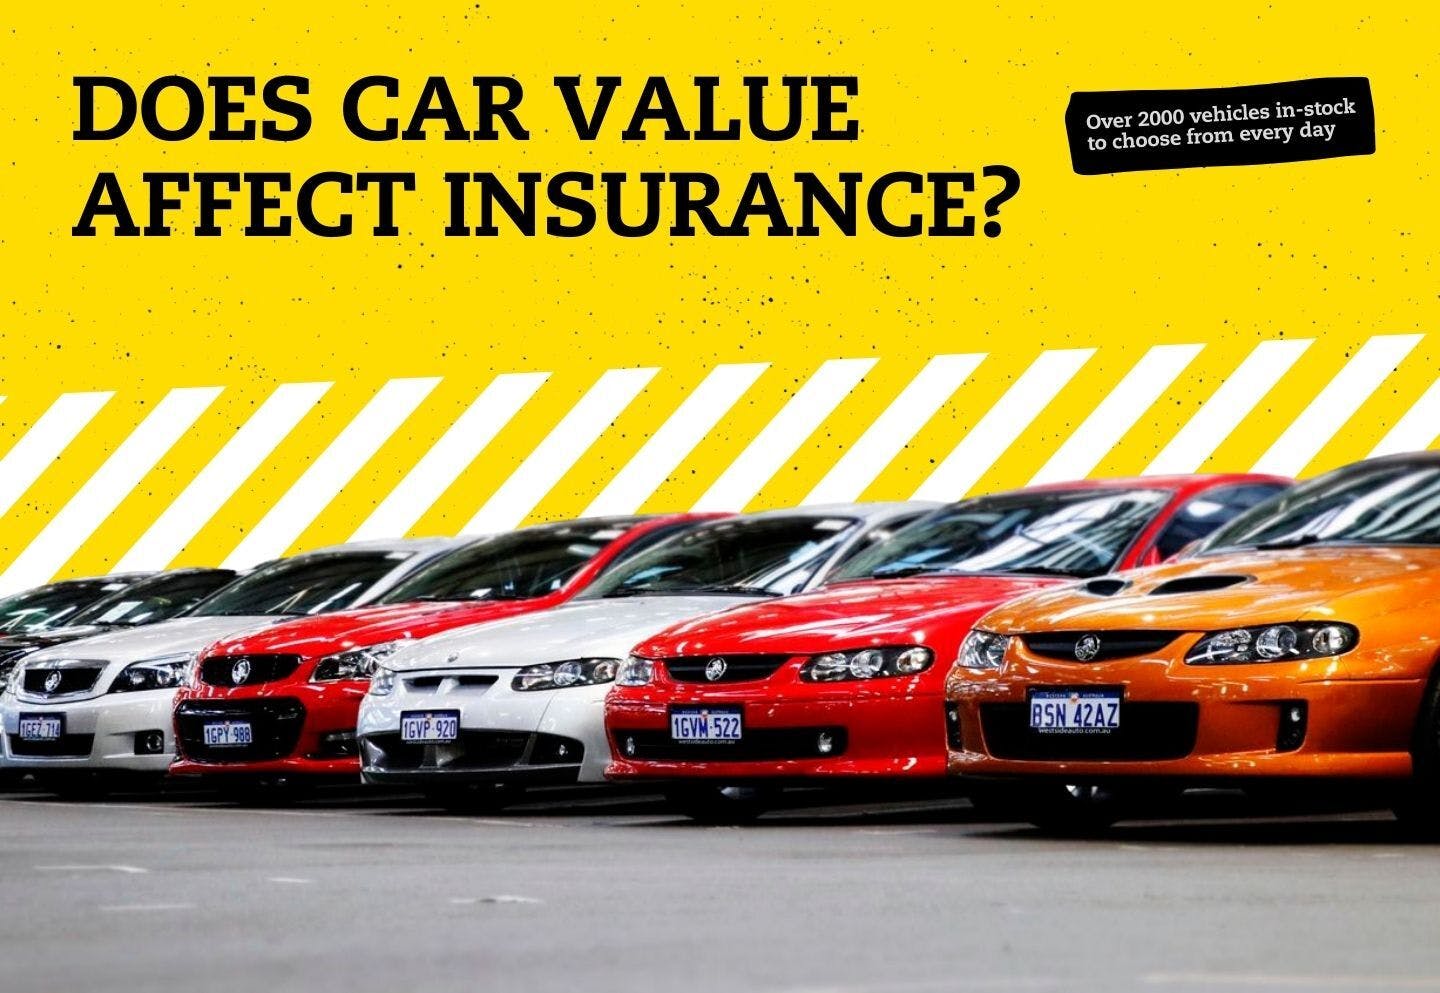 https://wsa-website-assets.s3.amazonaws.com/assets/images/Does-Car-Value-Affect-Insurance.jpg